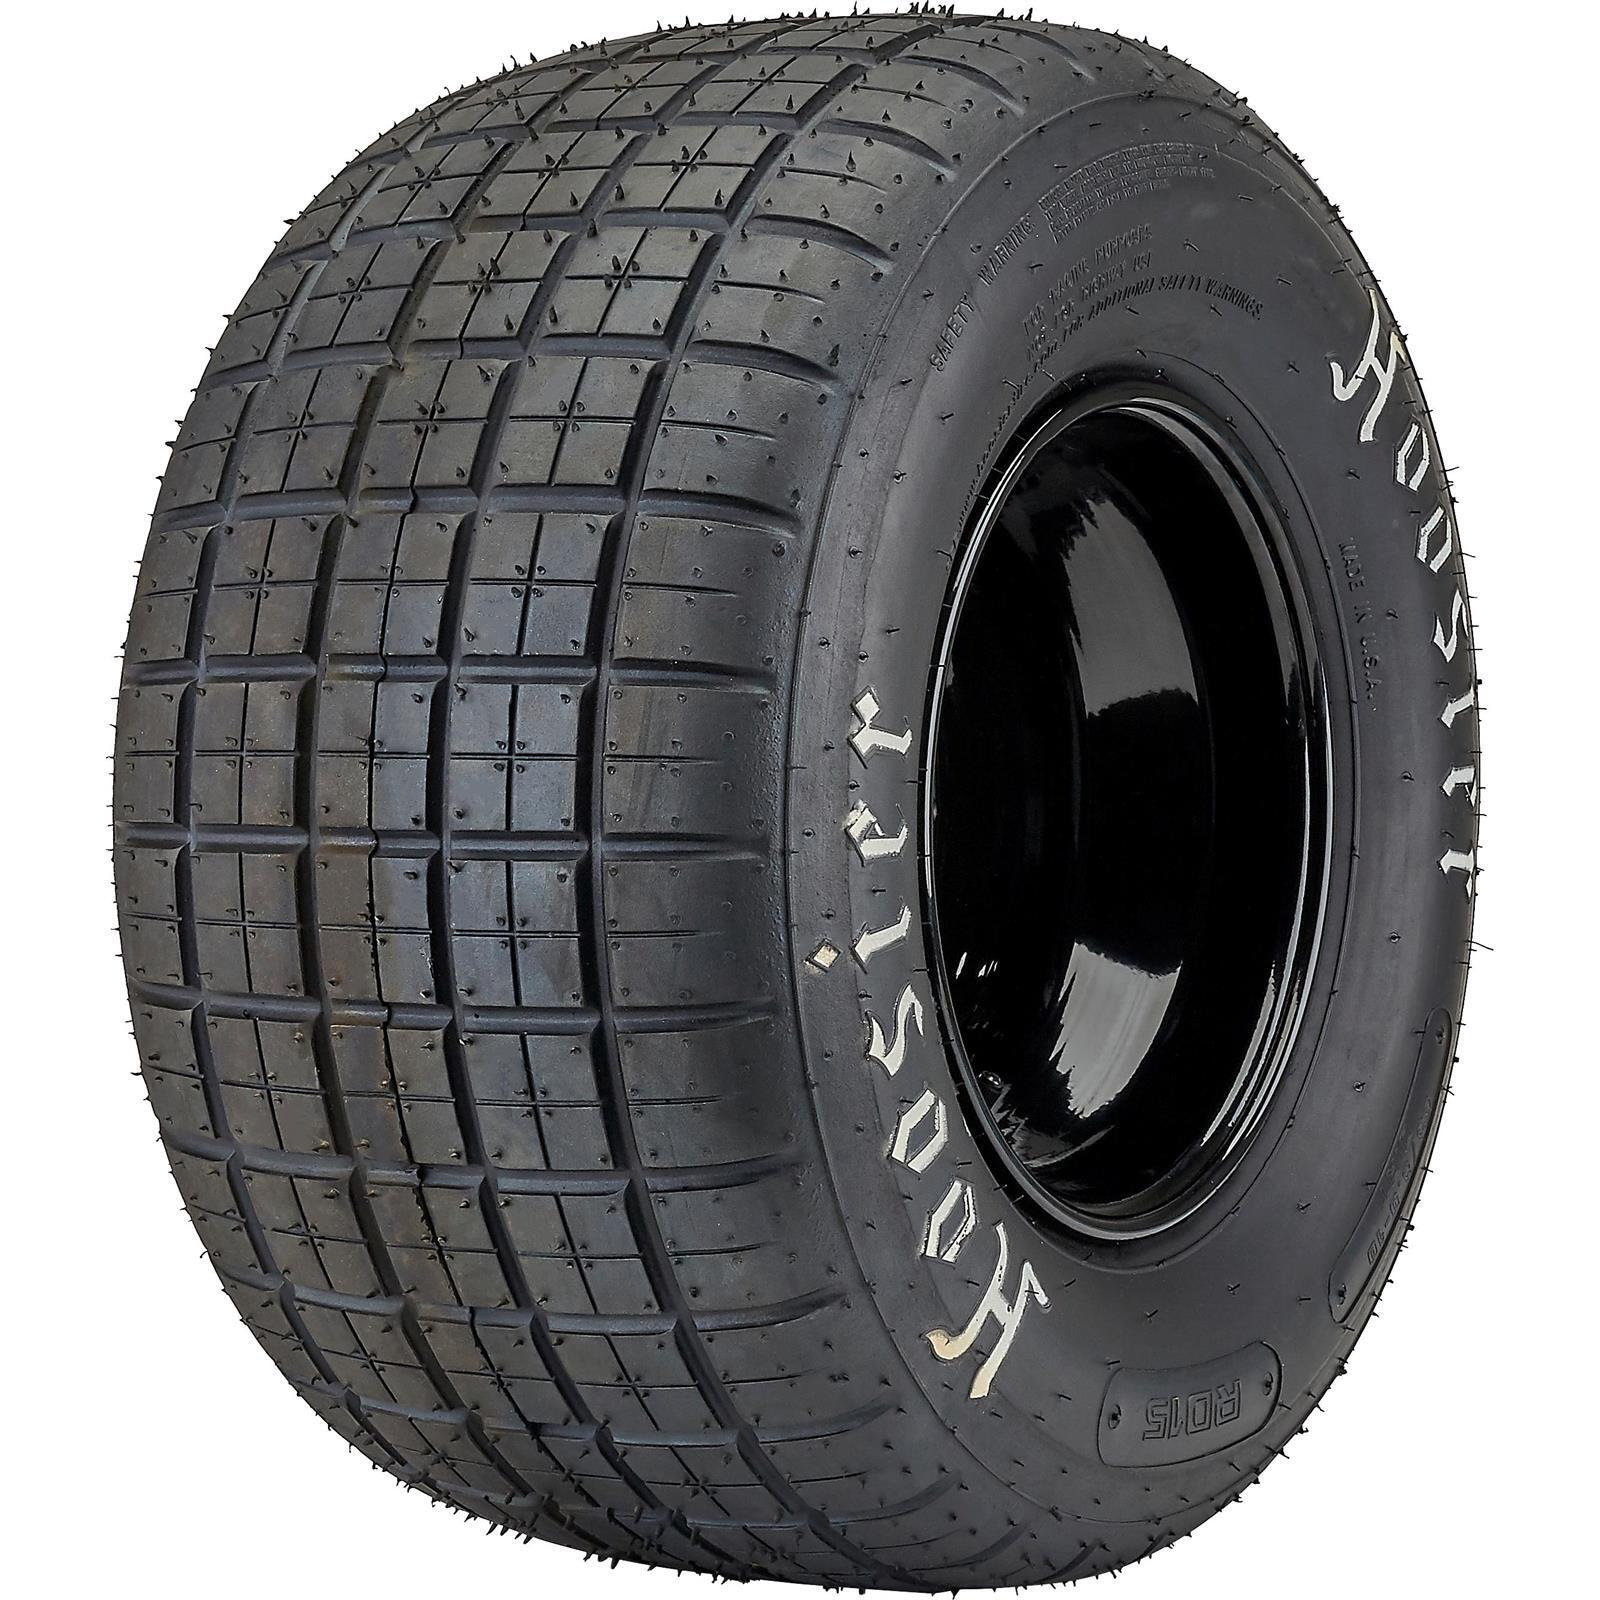 Hoosier 42183-RD15 Midget/Micro/Jr Sprint Tire, 63.0/10.0-10 RD15